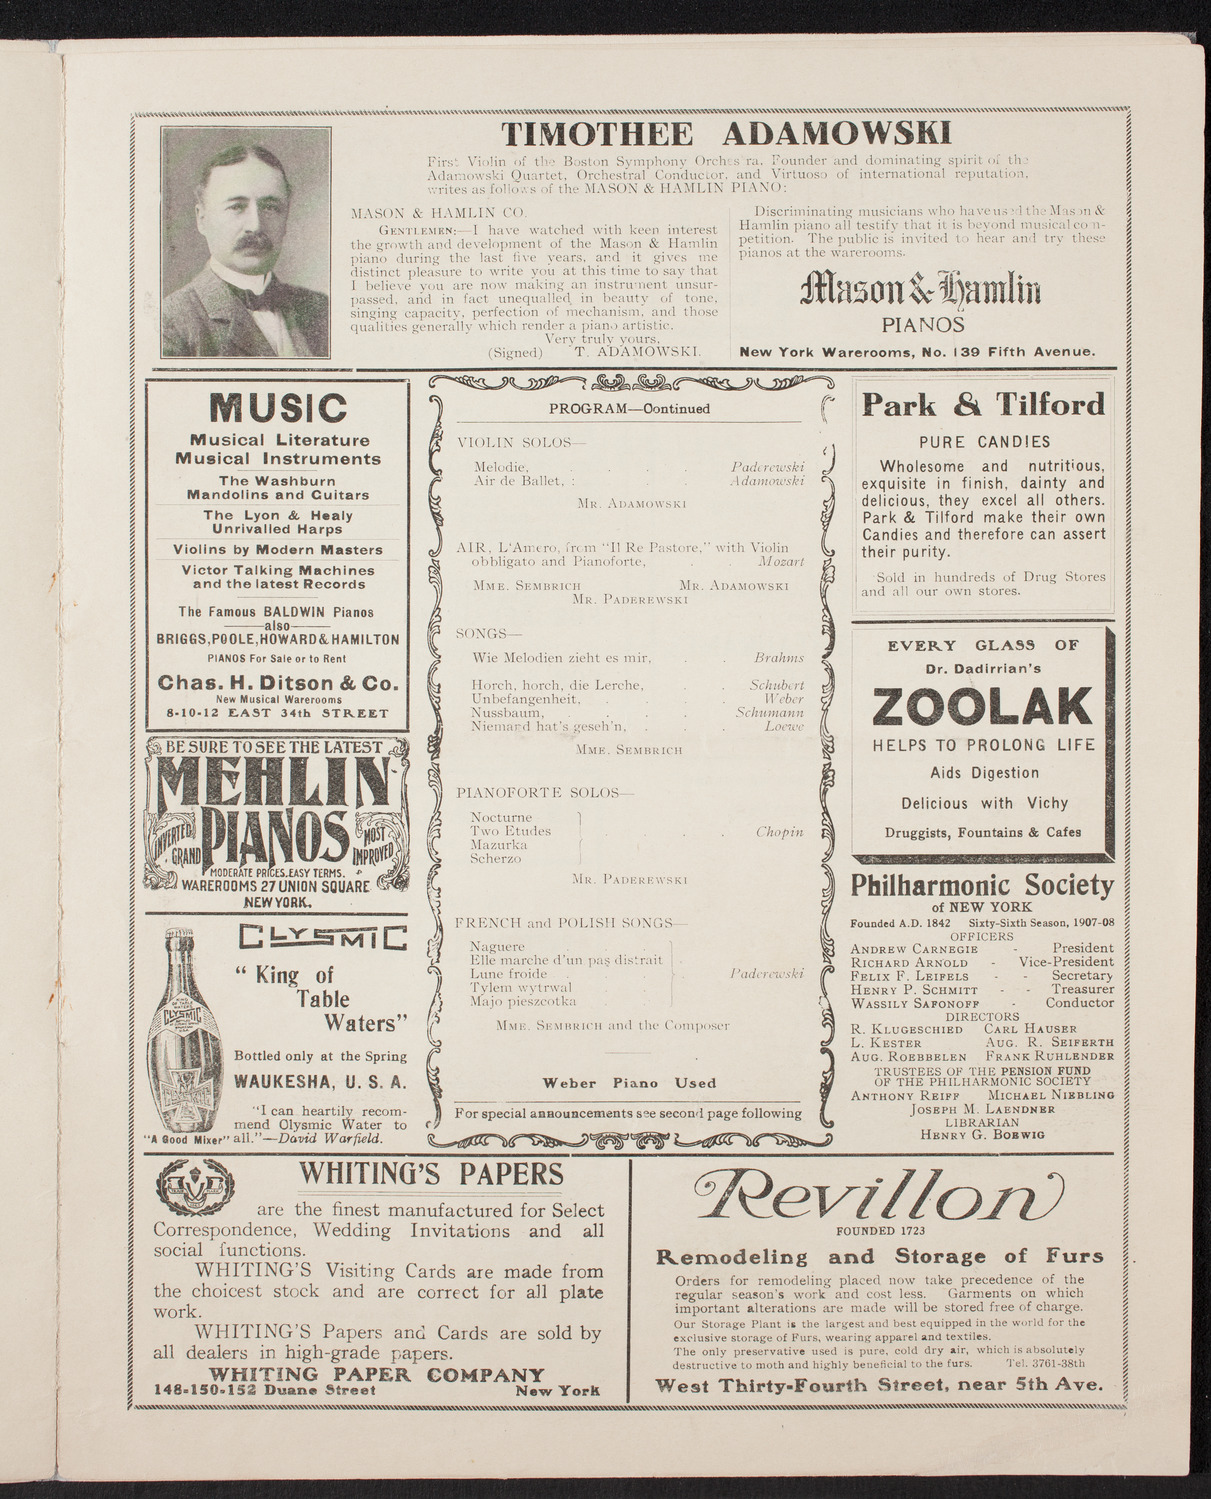 Marcella Sembrich, Soprano, Ignacy Jan Paderewski, Piano, and Timothy Adamowski, Violin, May 2, 1908, program page 7